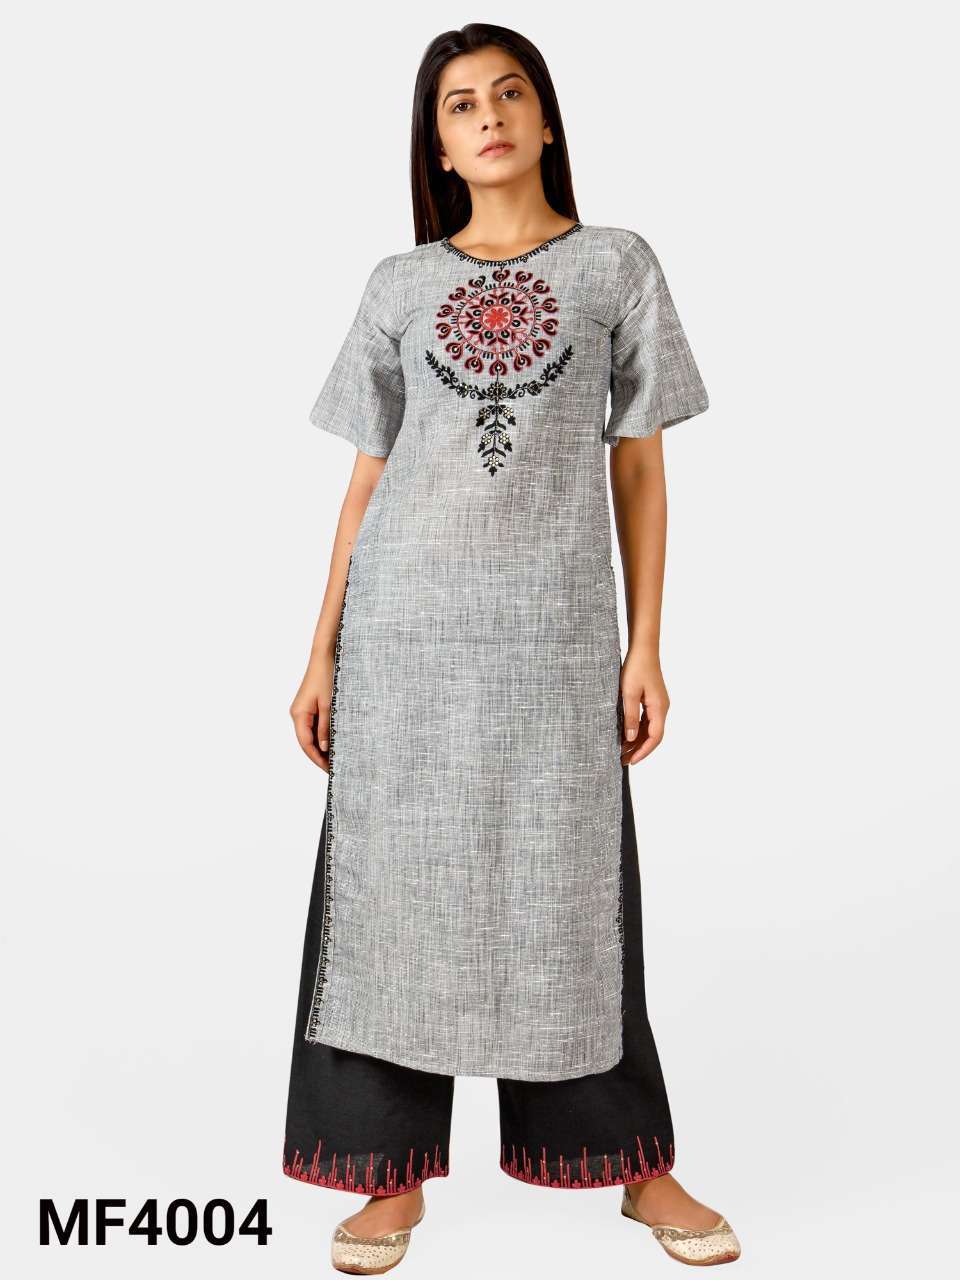 Mesmora Indian Women Fancy Casual Wear 100% Khadi Cotton Top And Pant Set  at Rs 1399/piece, Salwar Suit in Surat